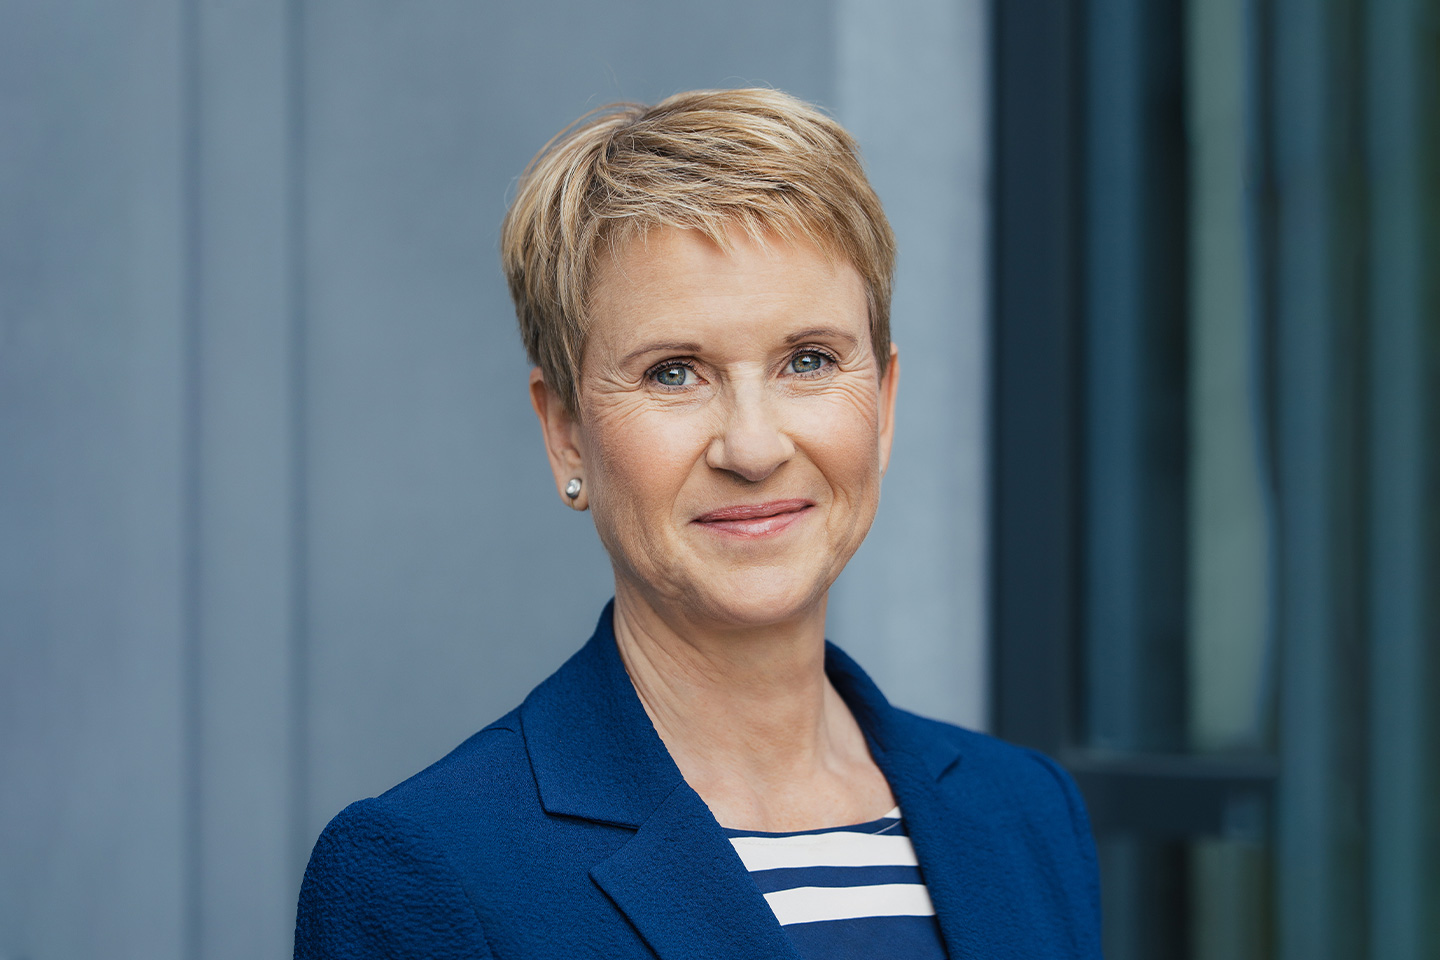 Susanne Klatten – member of the Supervisory Board